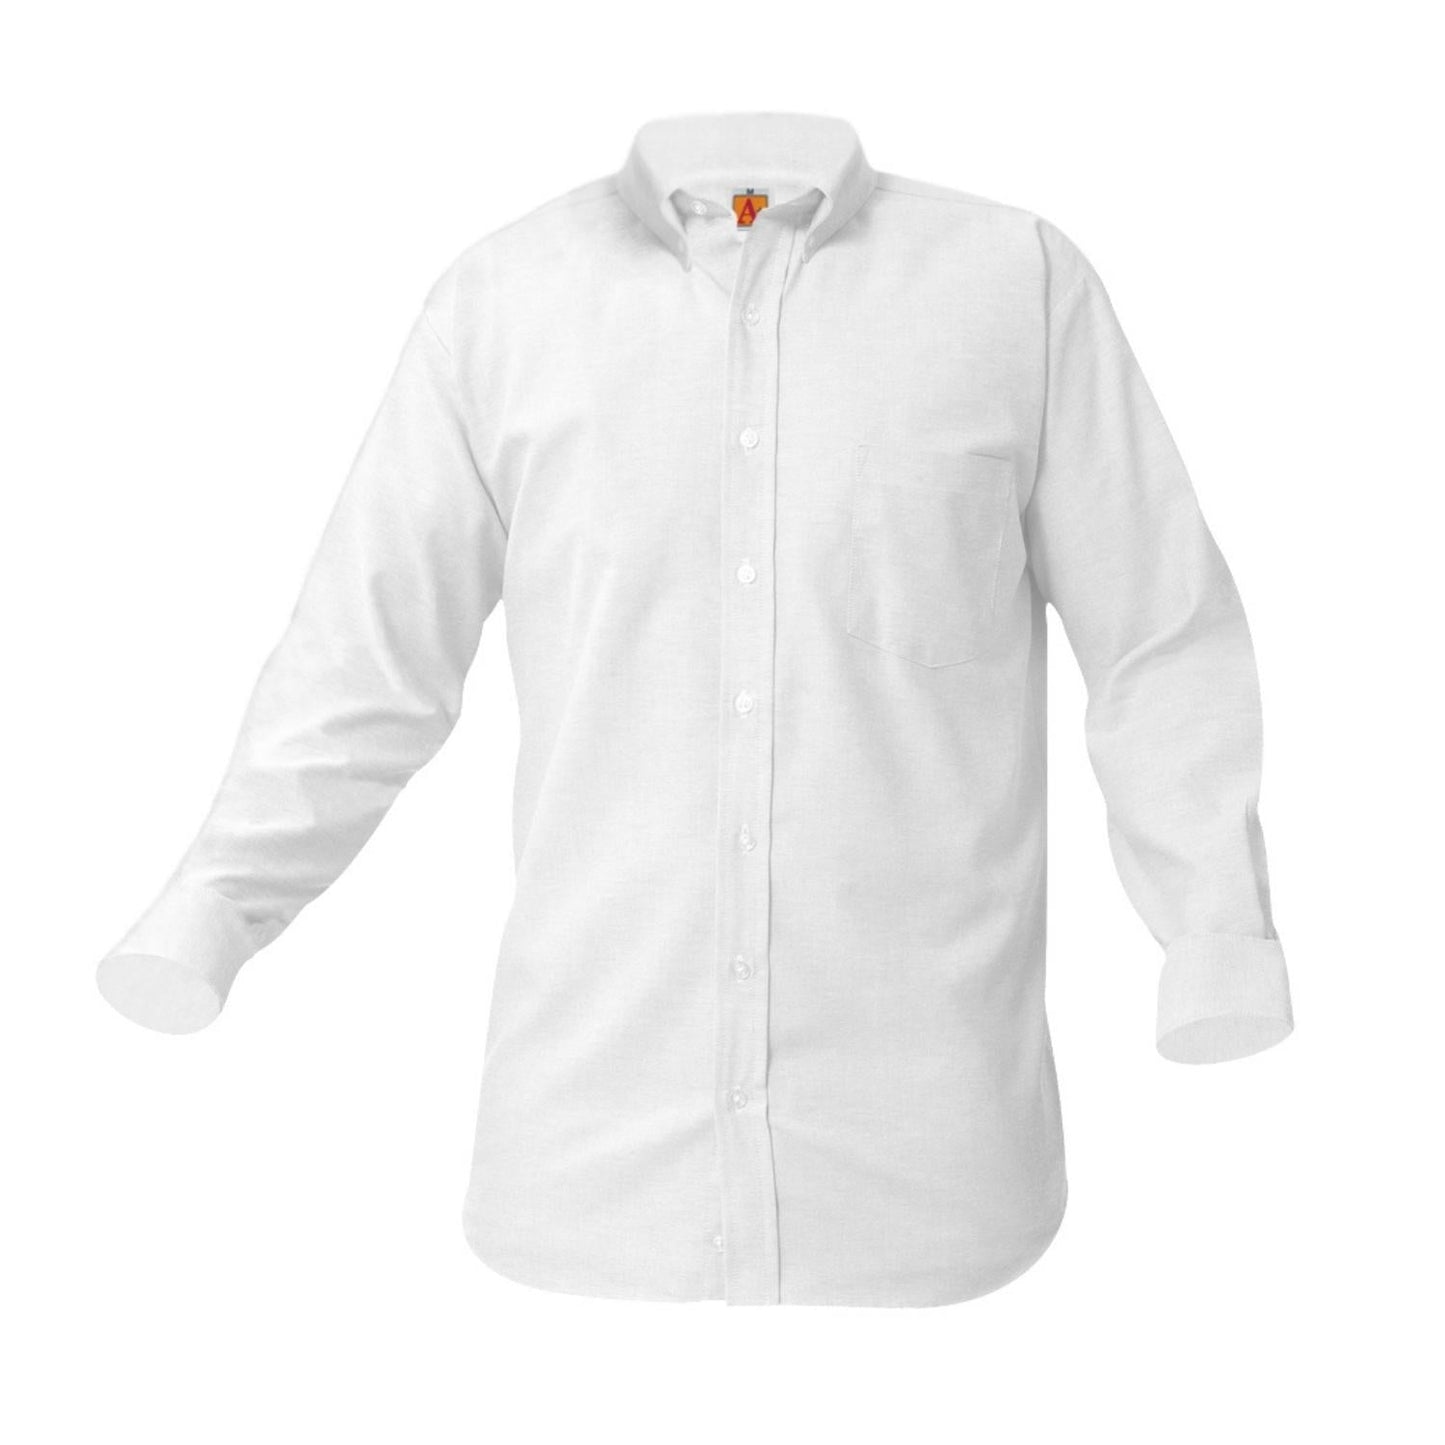 Oxford Long Sleeve Shirt (Male) w/Logo - 1102